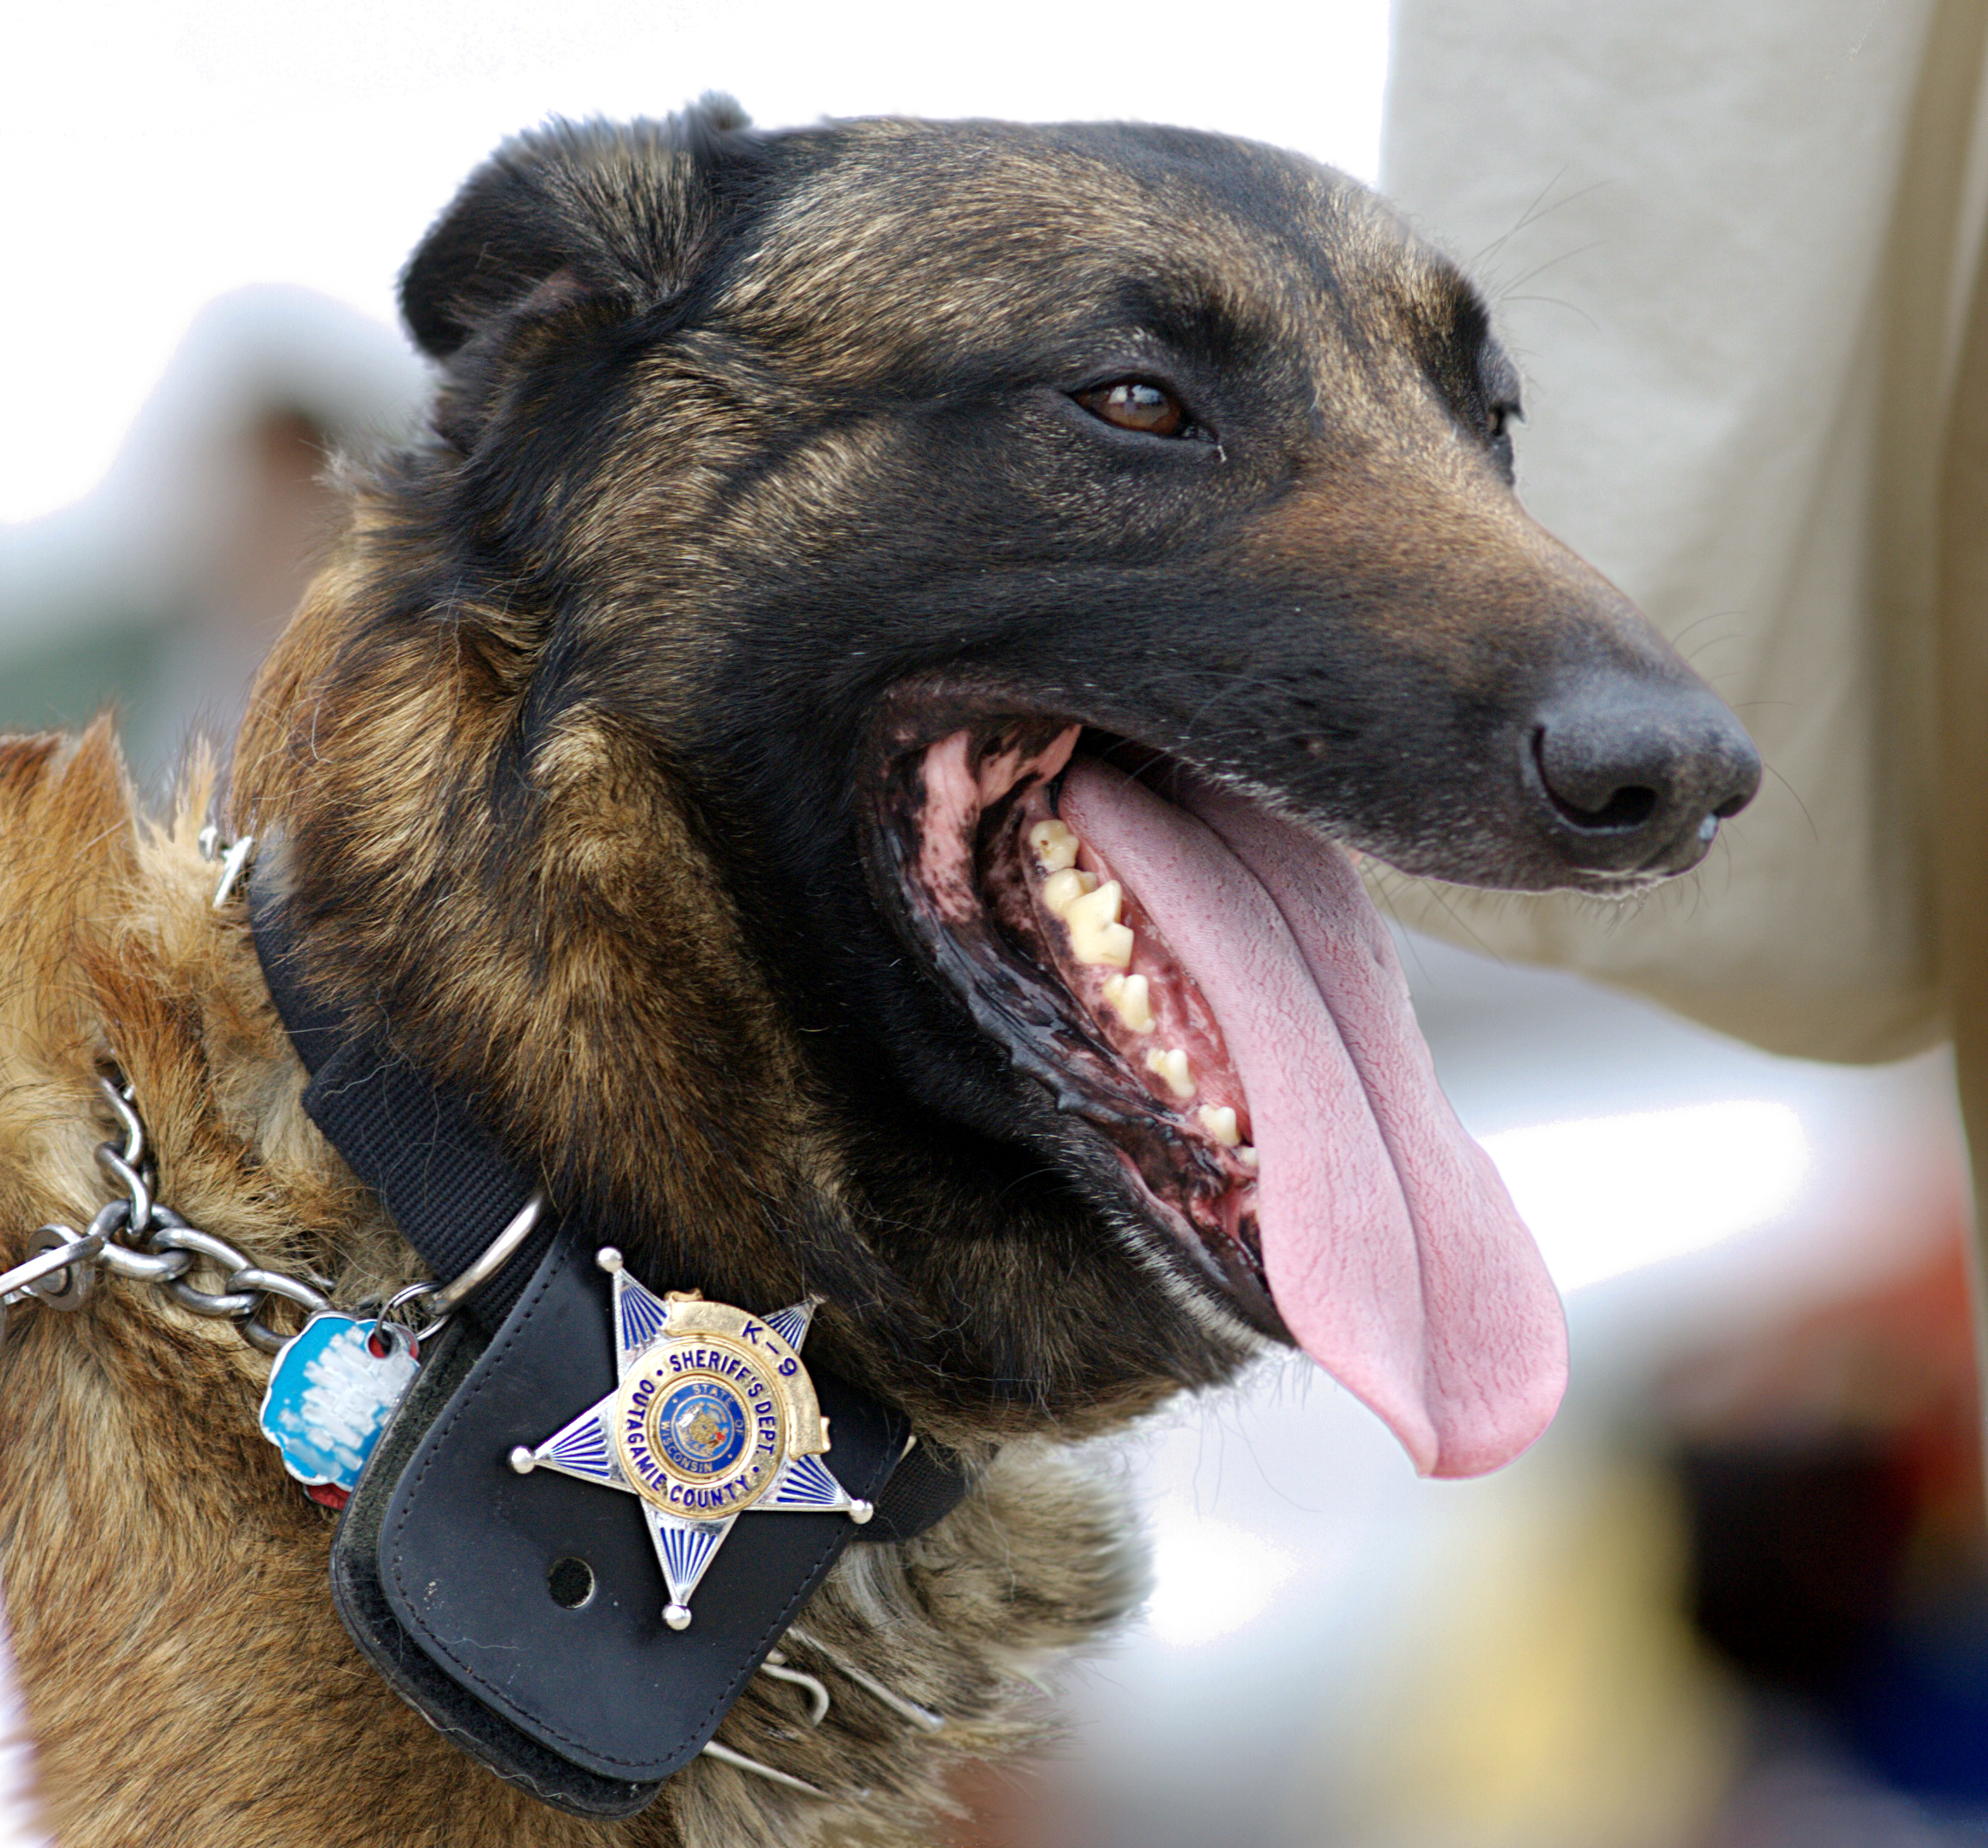 Police dog - Wikipedia